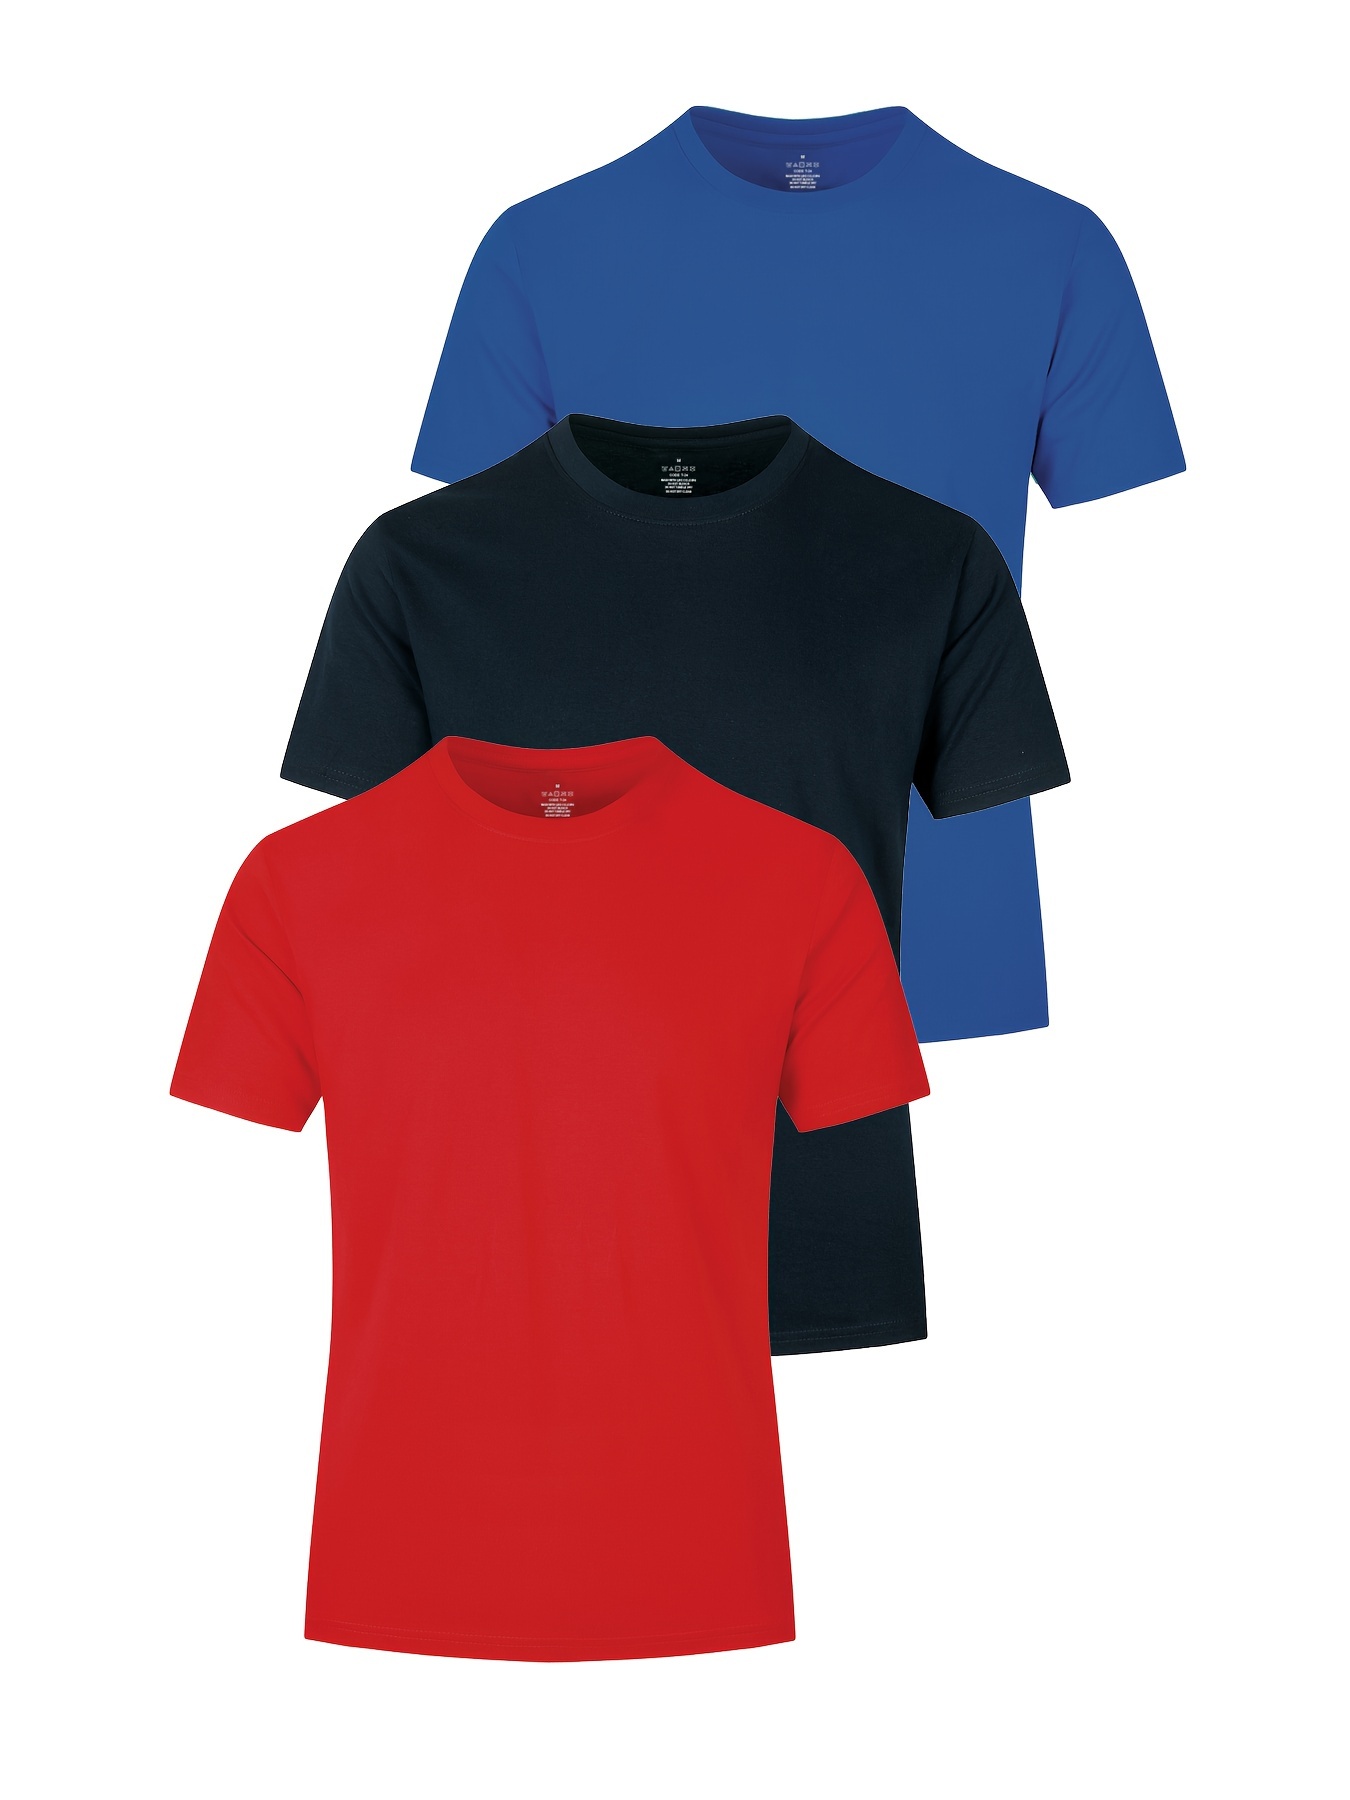 Men's Black Red White Navy Blue Solid Plain Tshirt 95%Cotton 5